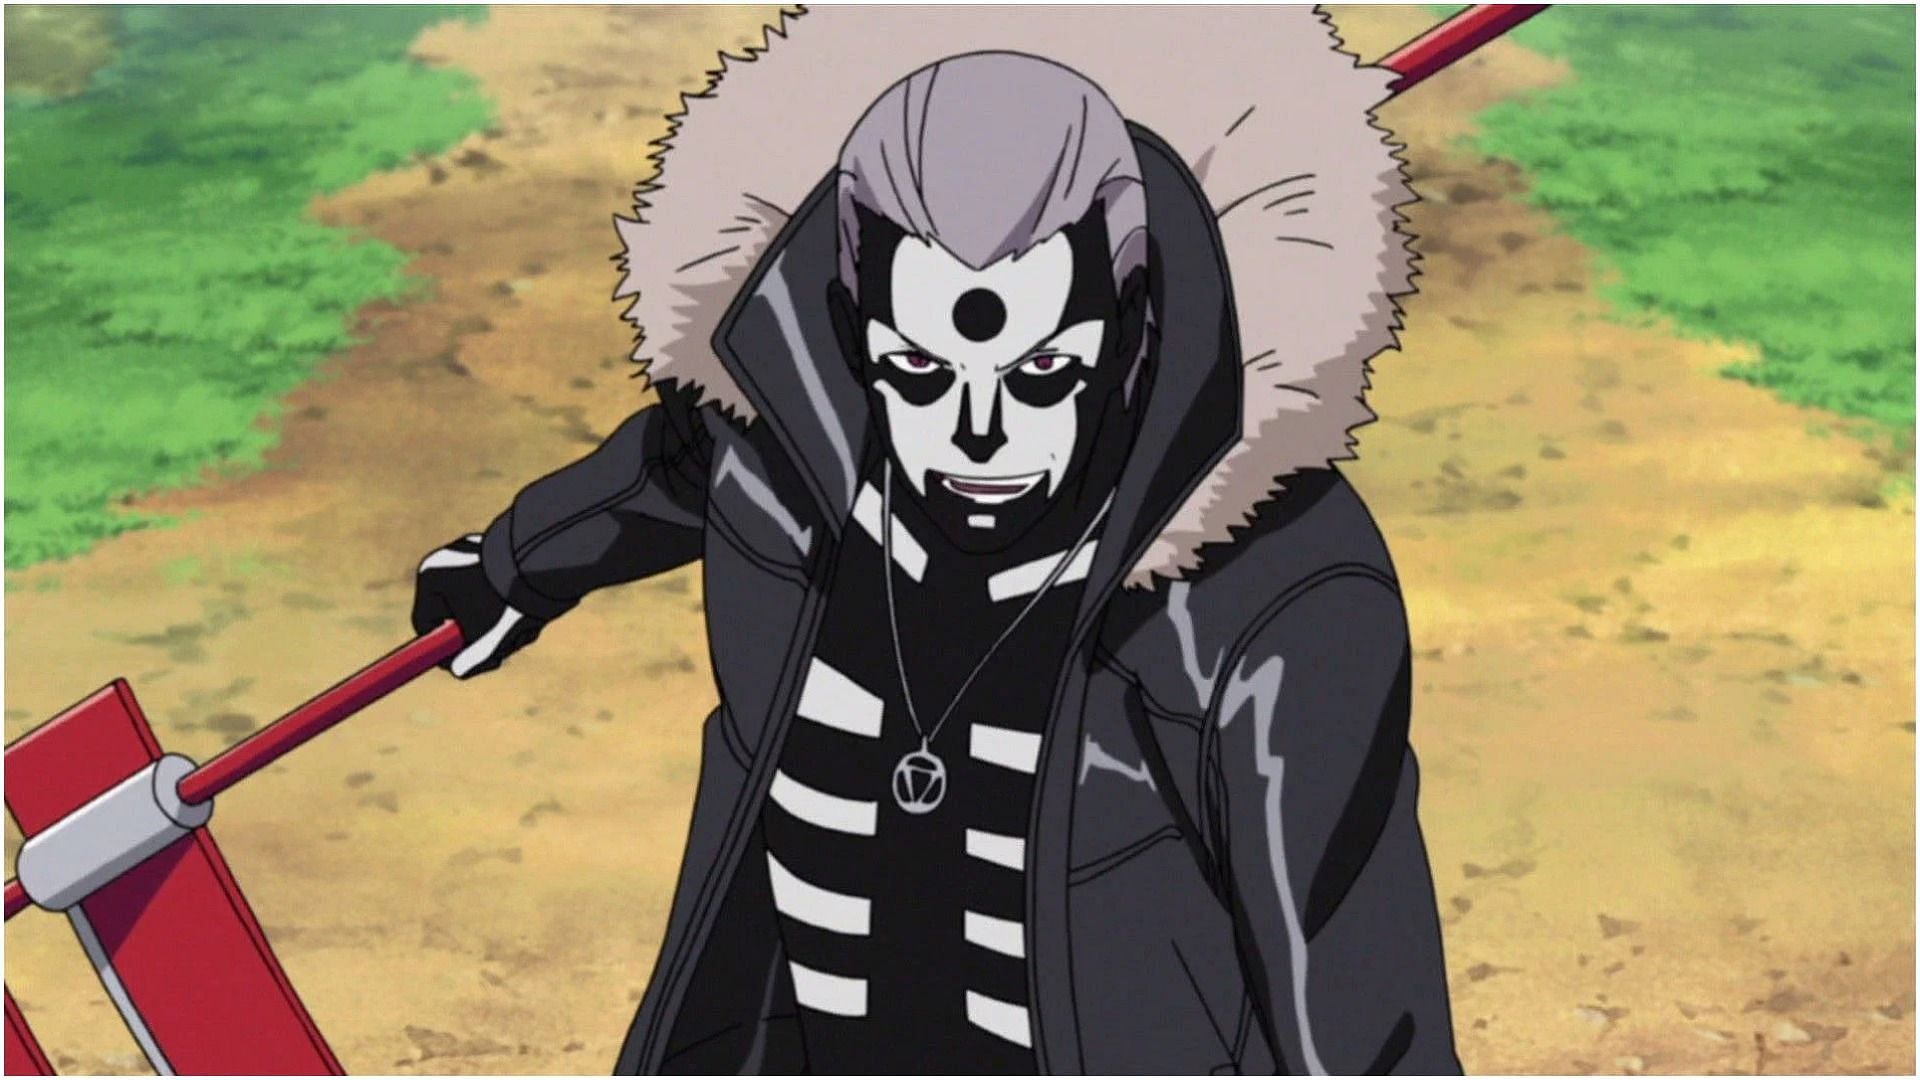 Hidan as seen in Naruto (Image via Studio Pierrot)